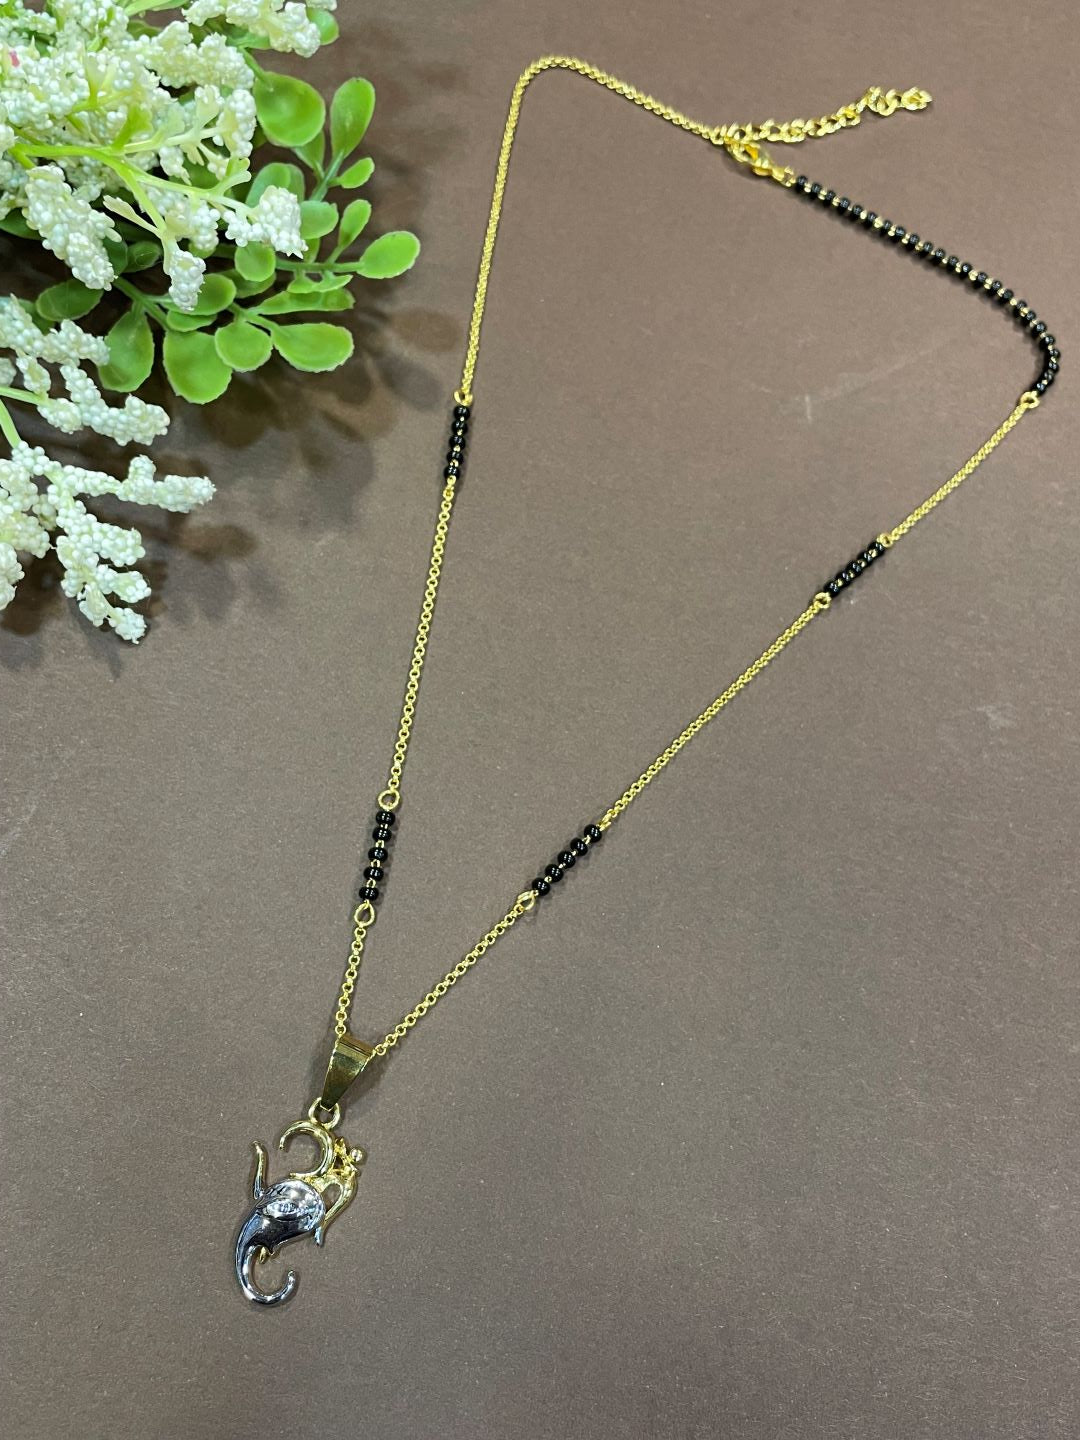 Short Mangalsutra/Necklace With a Om & Ganesha Pendant